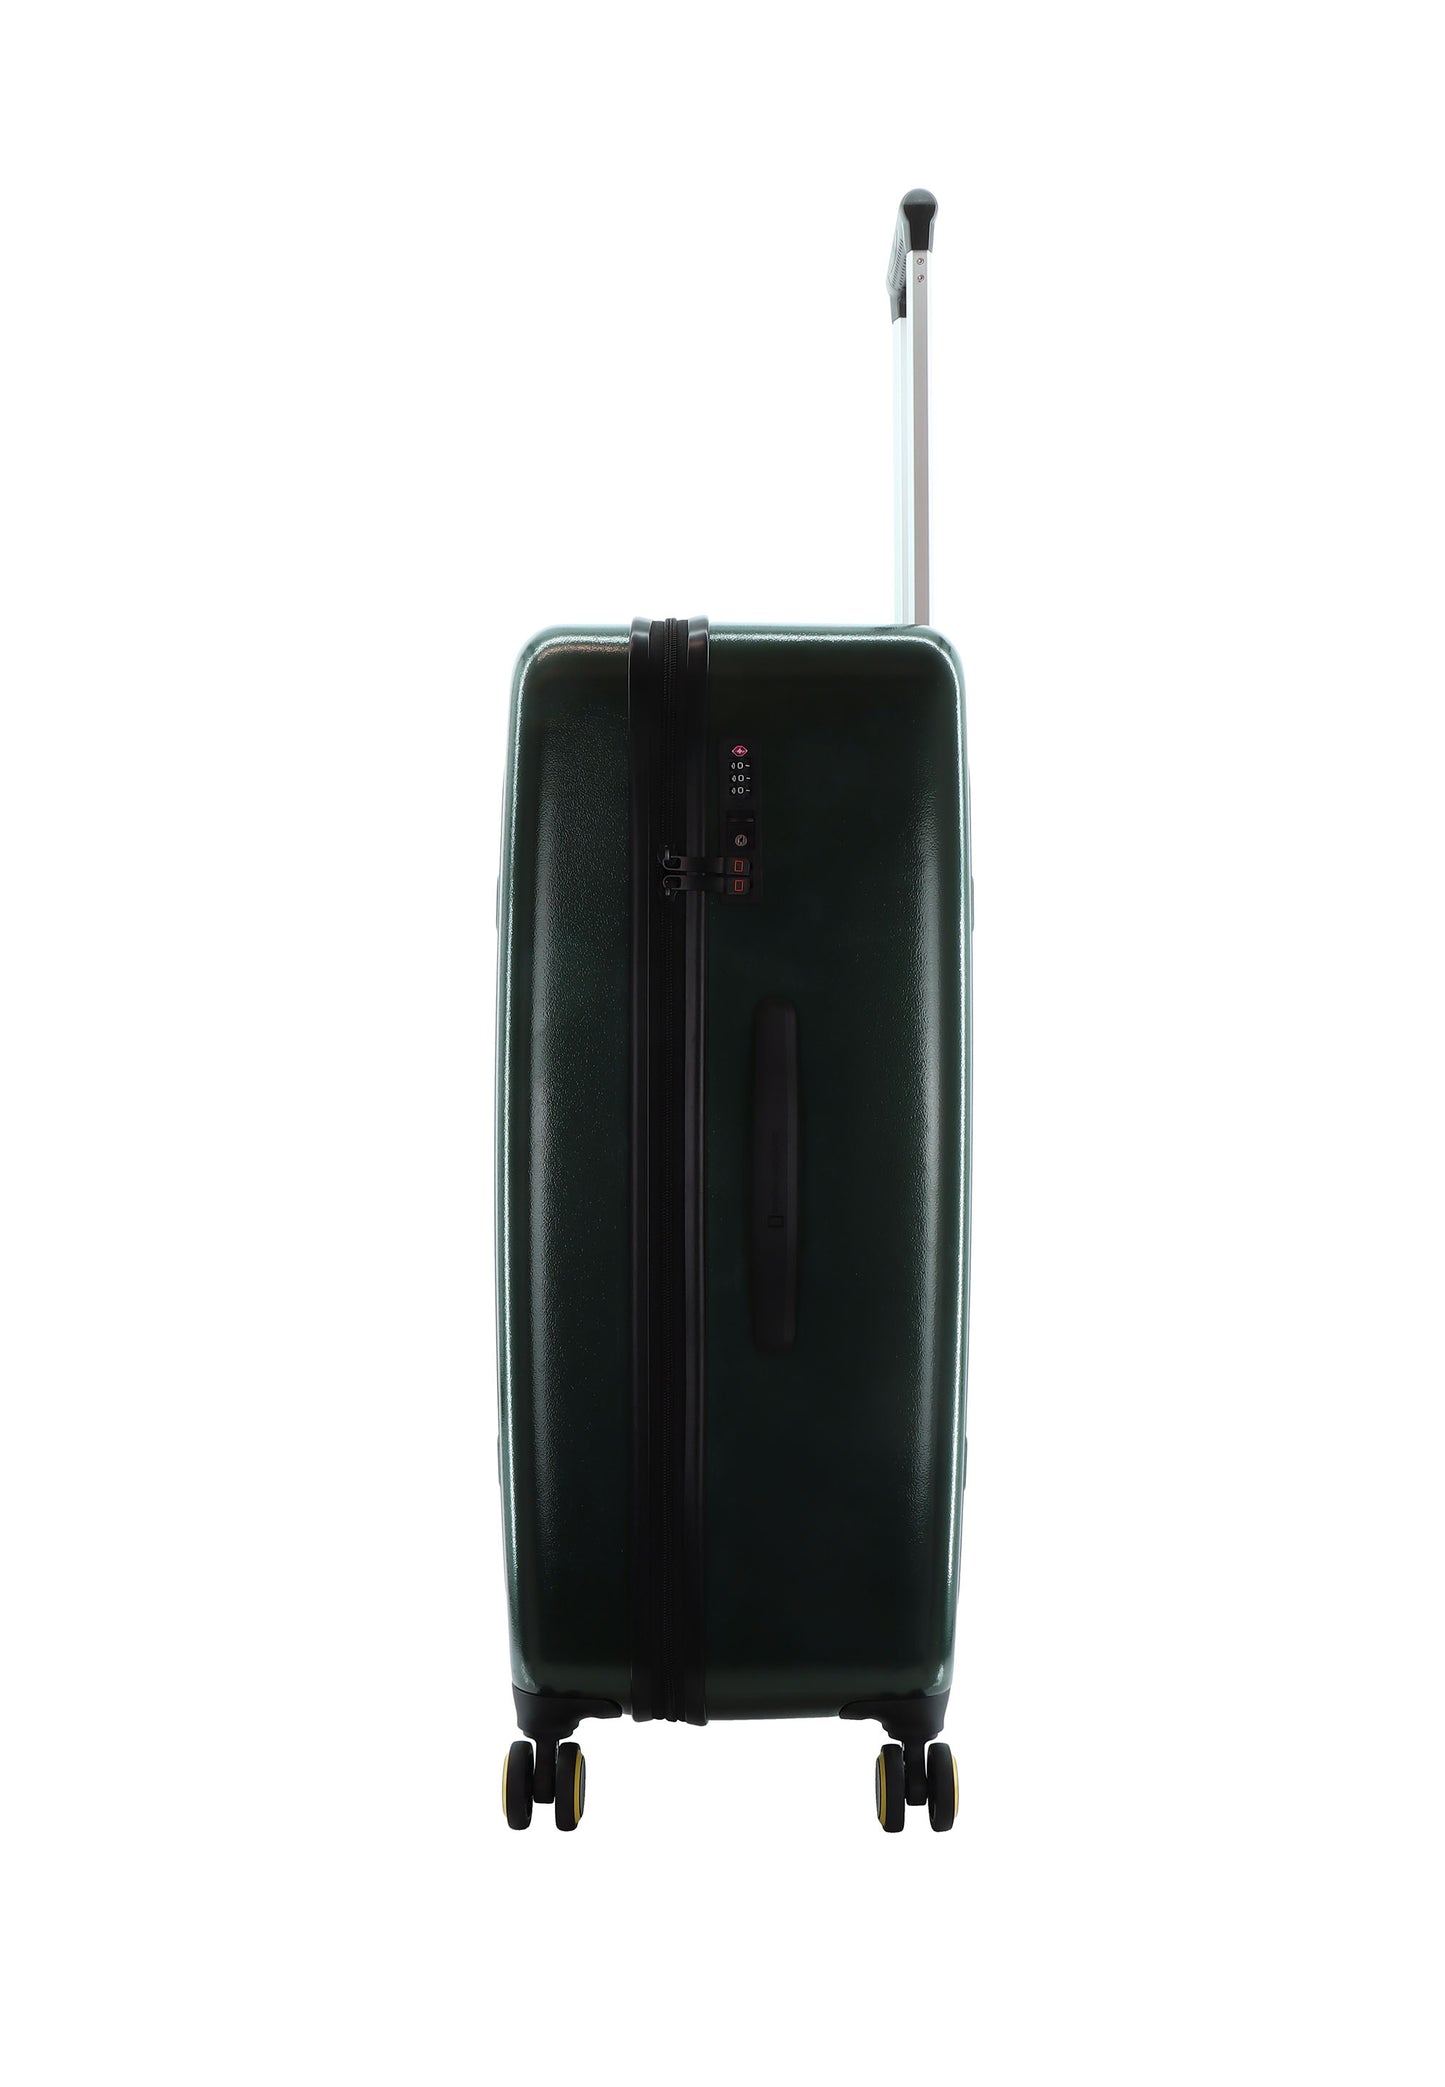 Valise rigide / trolley / valise de voyage National Geographic - 76 cm (grande) - Balance rPET - Vert foncé